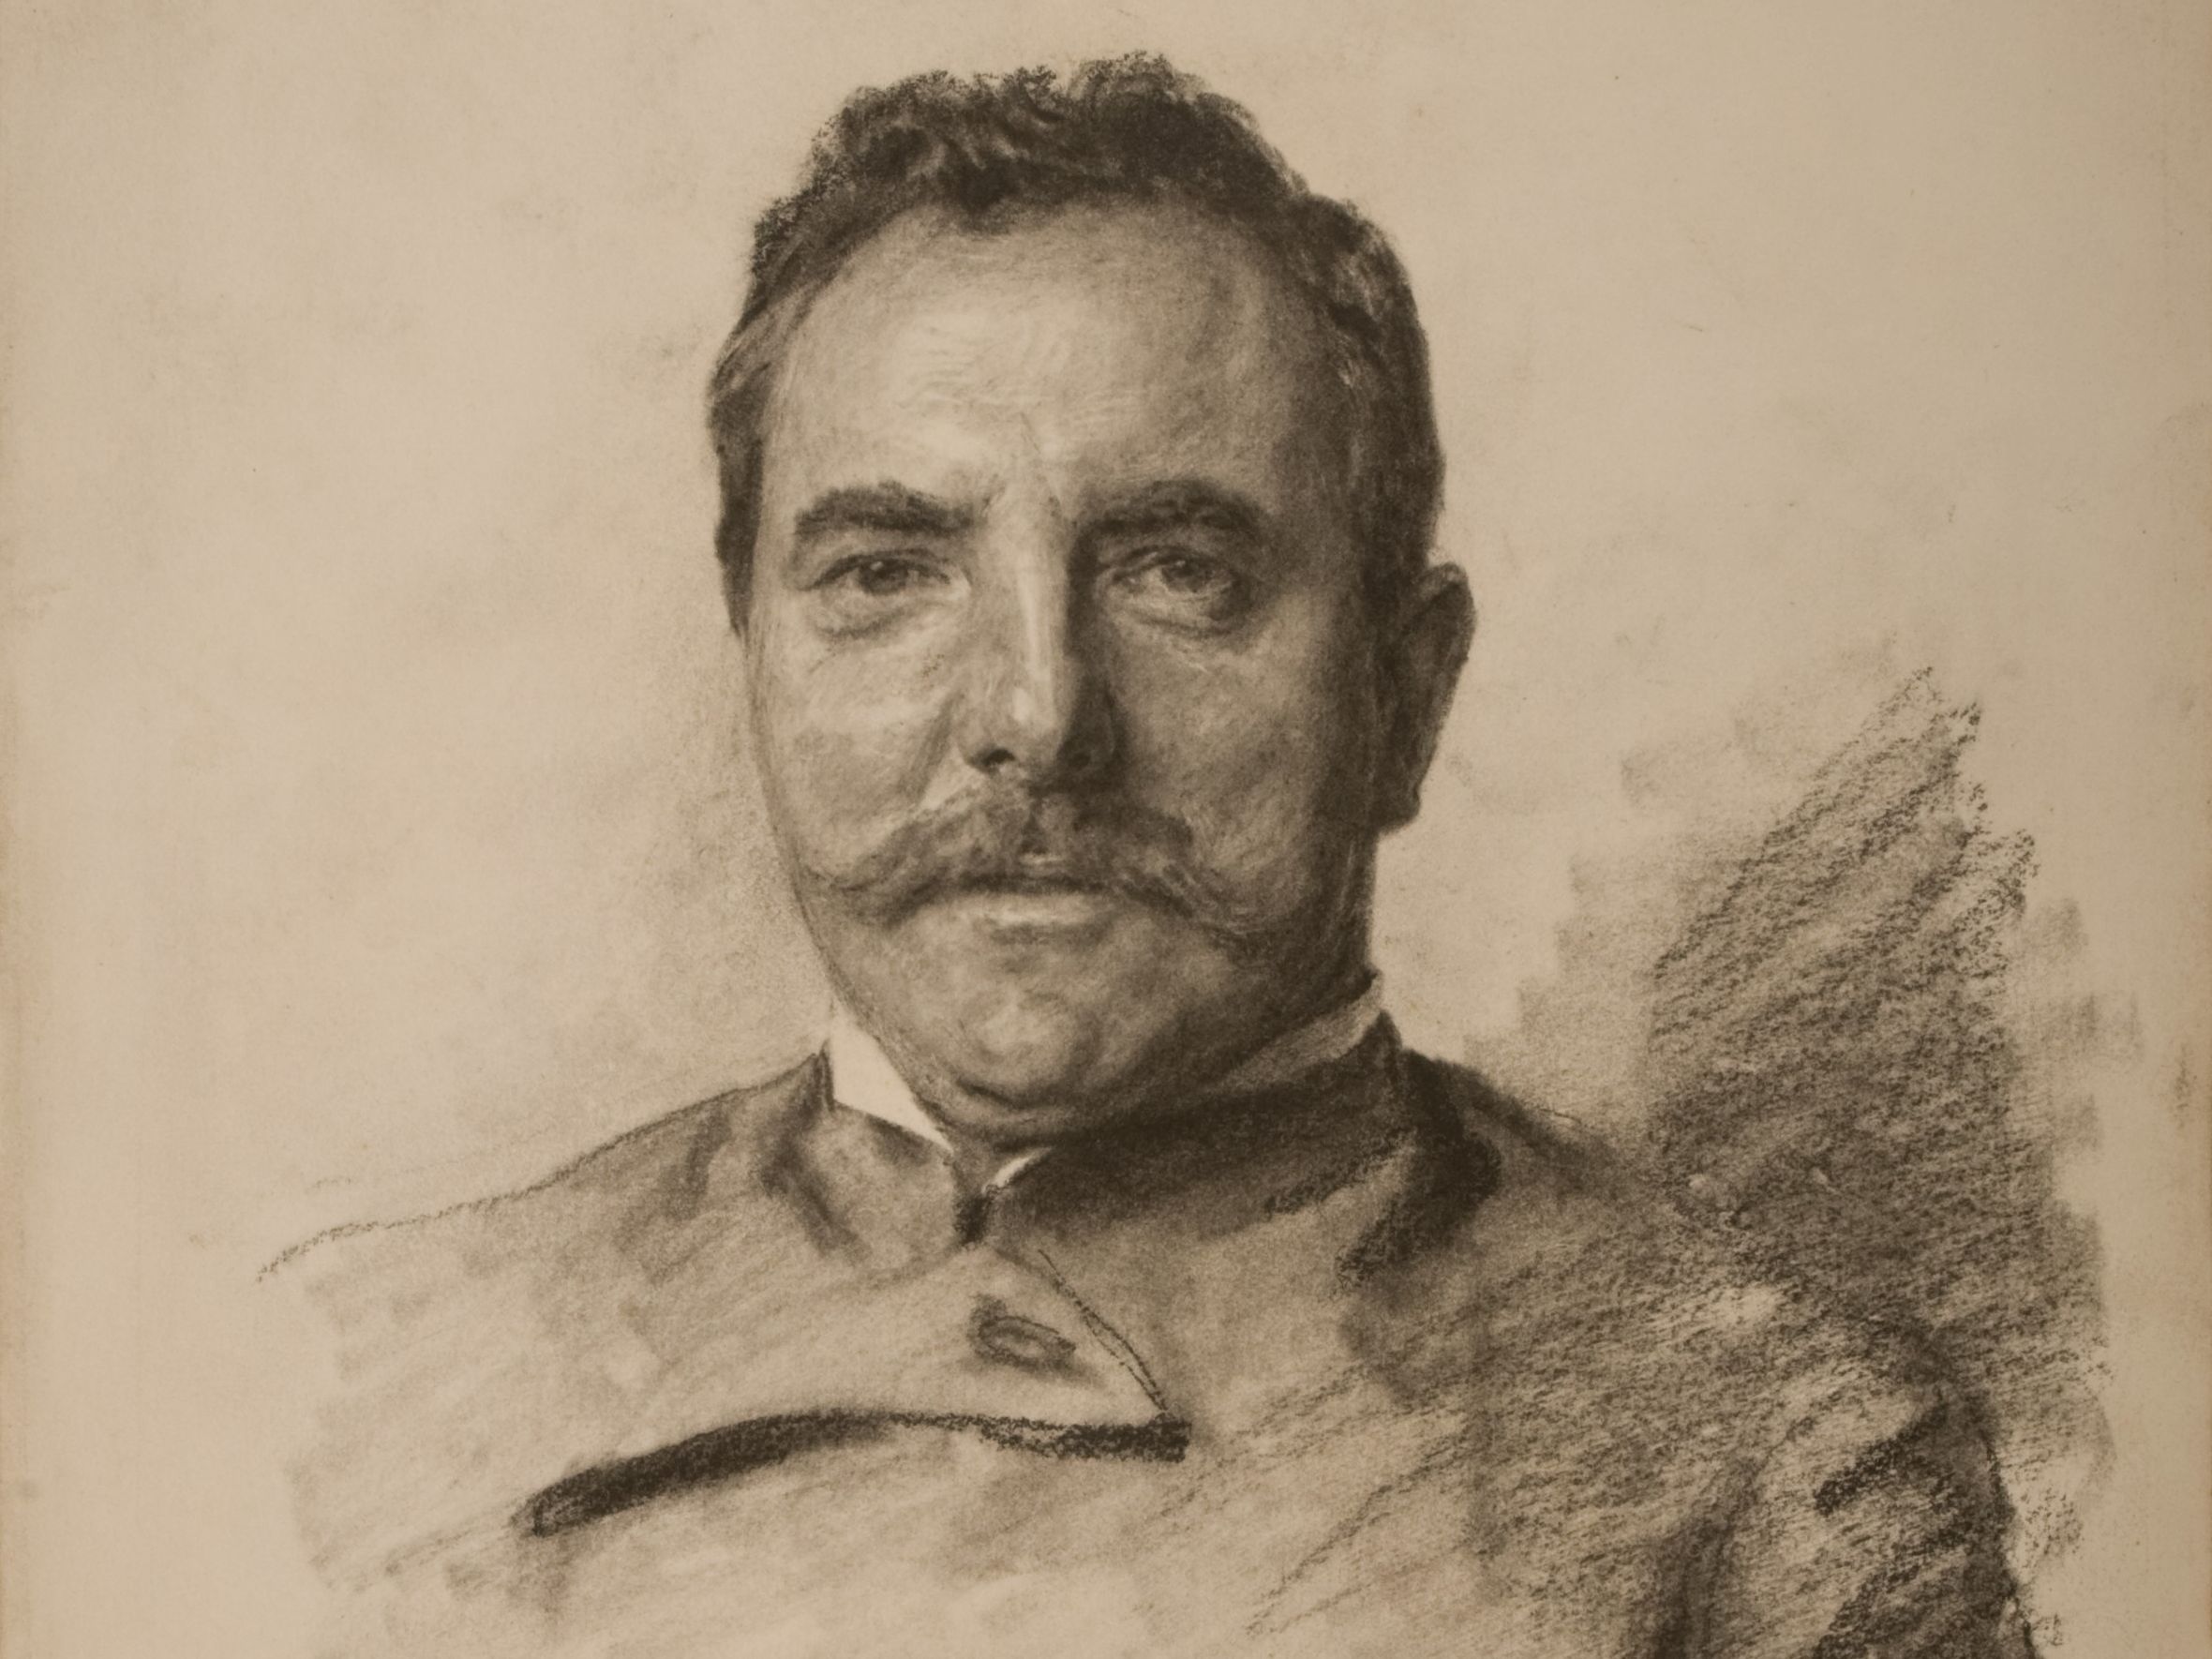 Portrait von Hermann Stockmann, 1909, Kohle auf Papier, 34 x 25 cm, re. u. sign., dat. “AL Ratzka 30. Juni 1909”